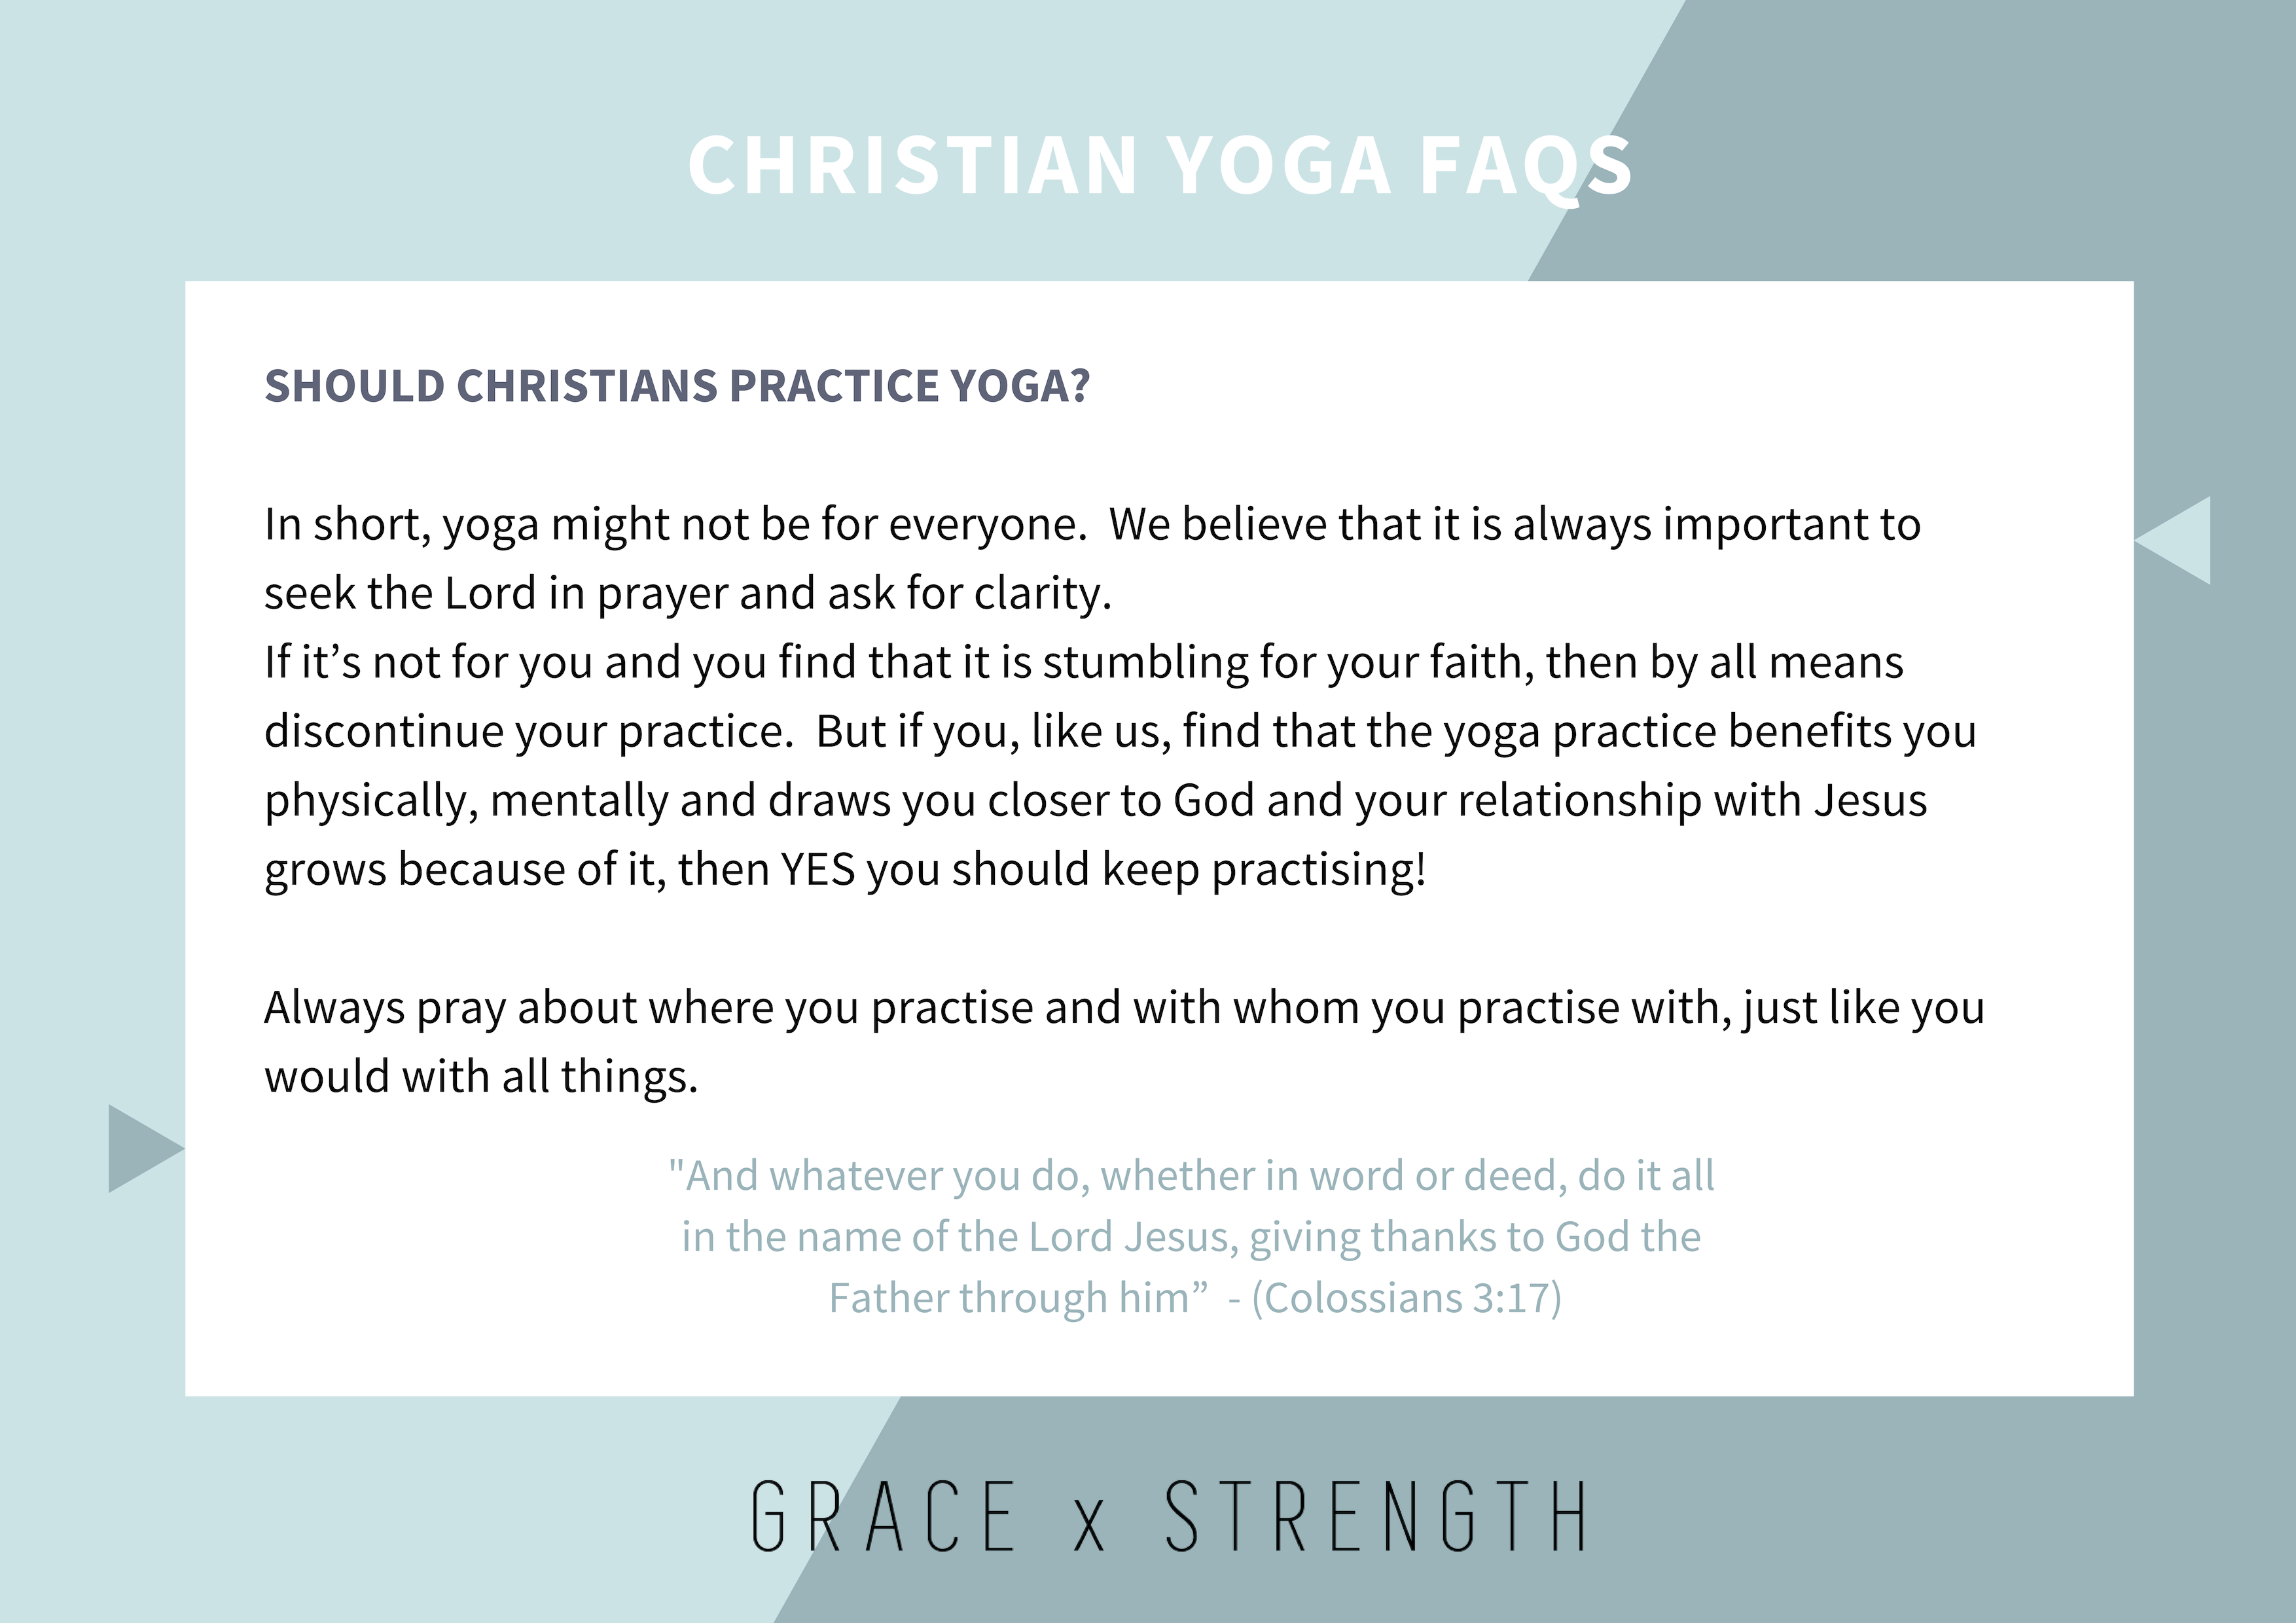 Should Christians Practise Yoga?